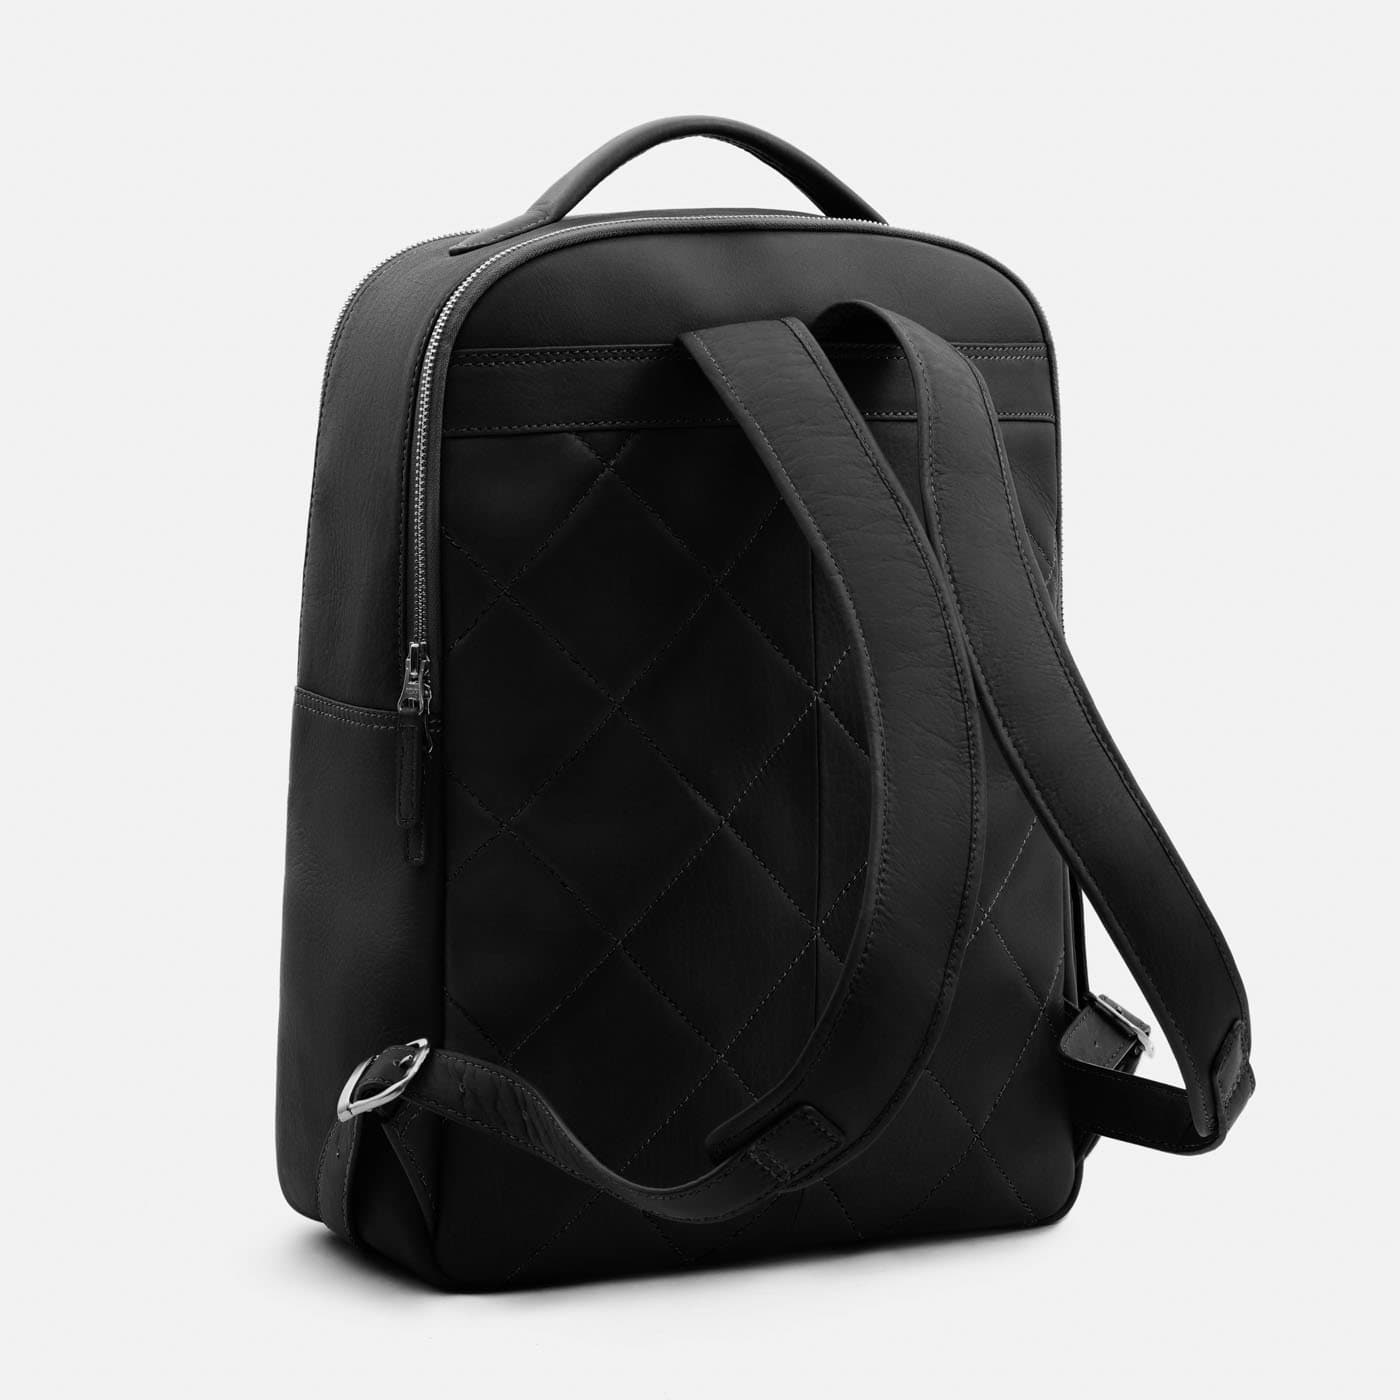 Jean Backpack - Black Soft Grain Leather